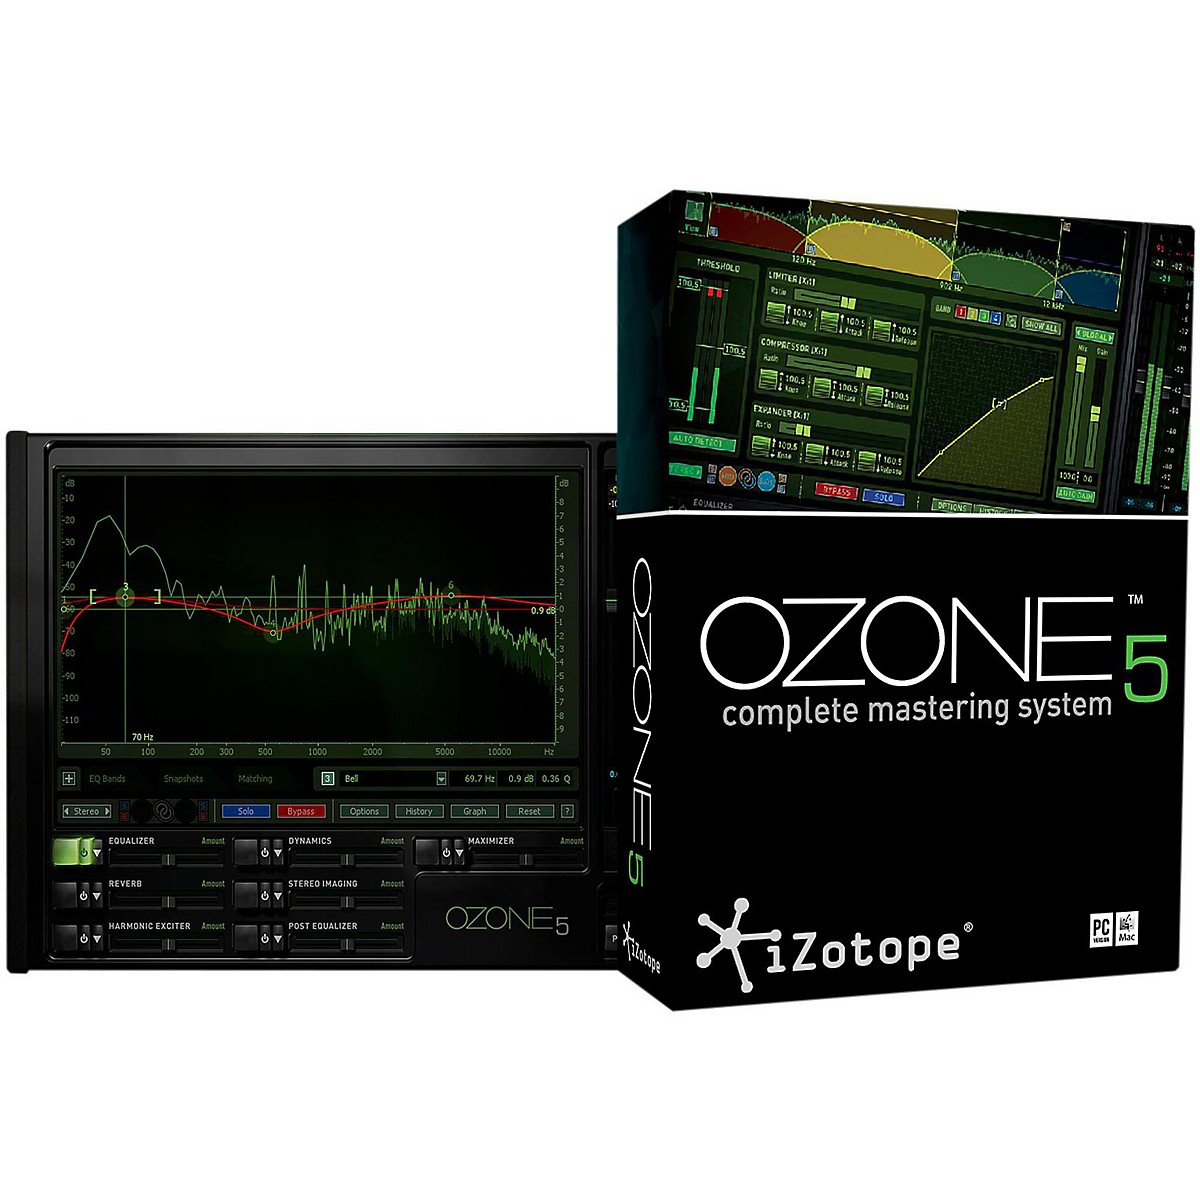 izotope ozone 4 mastering